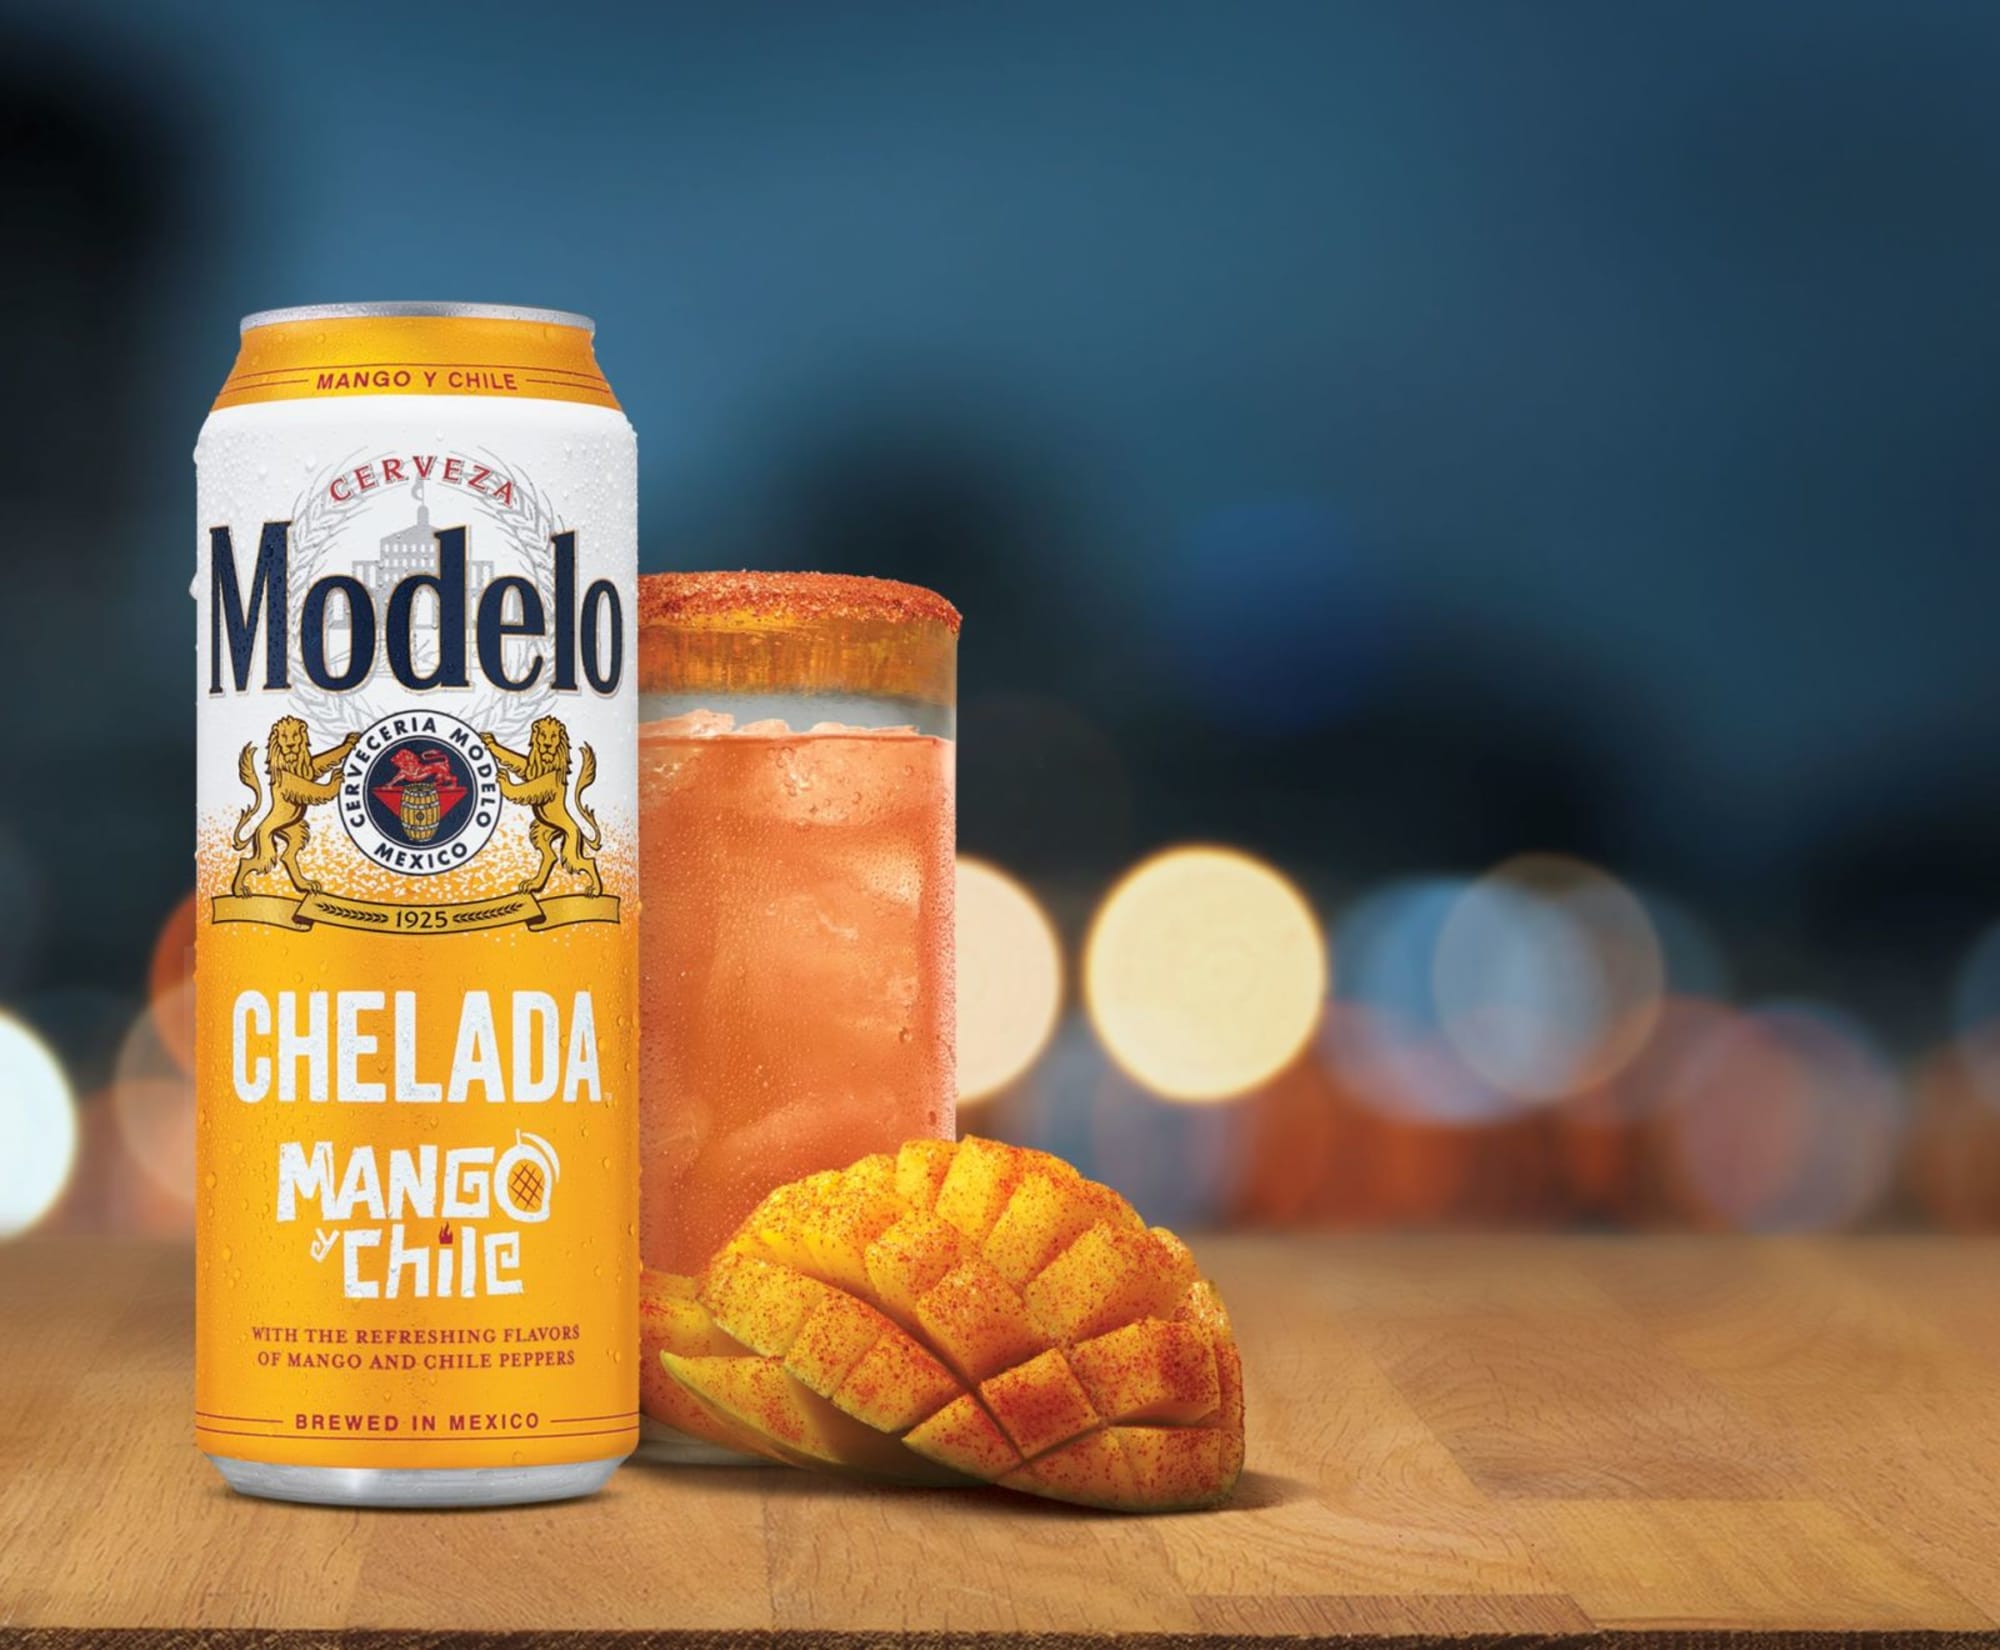 Modelo launches their new Mango y Chile Chelada